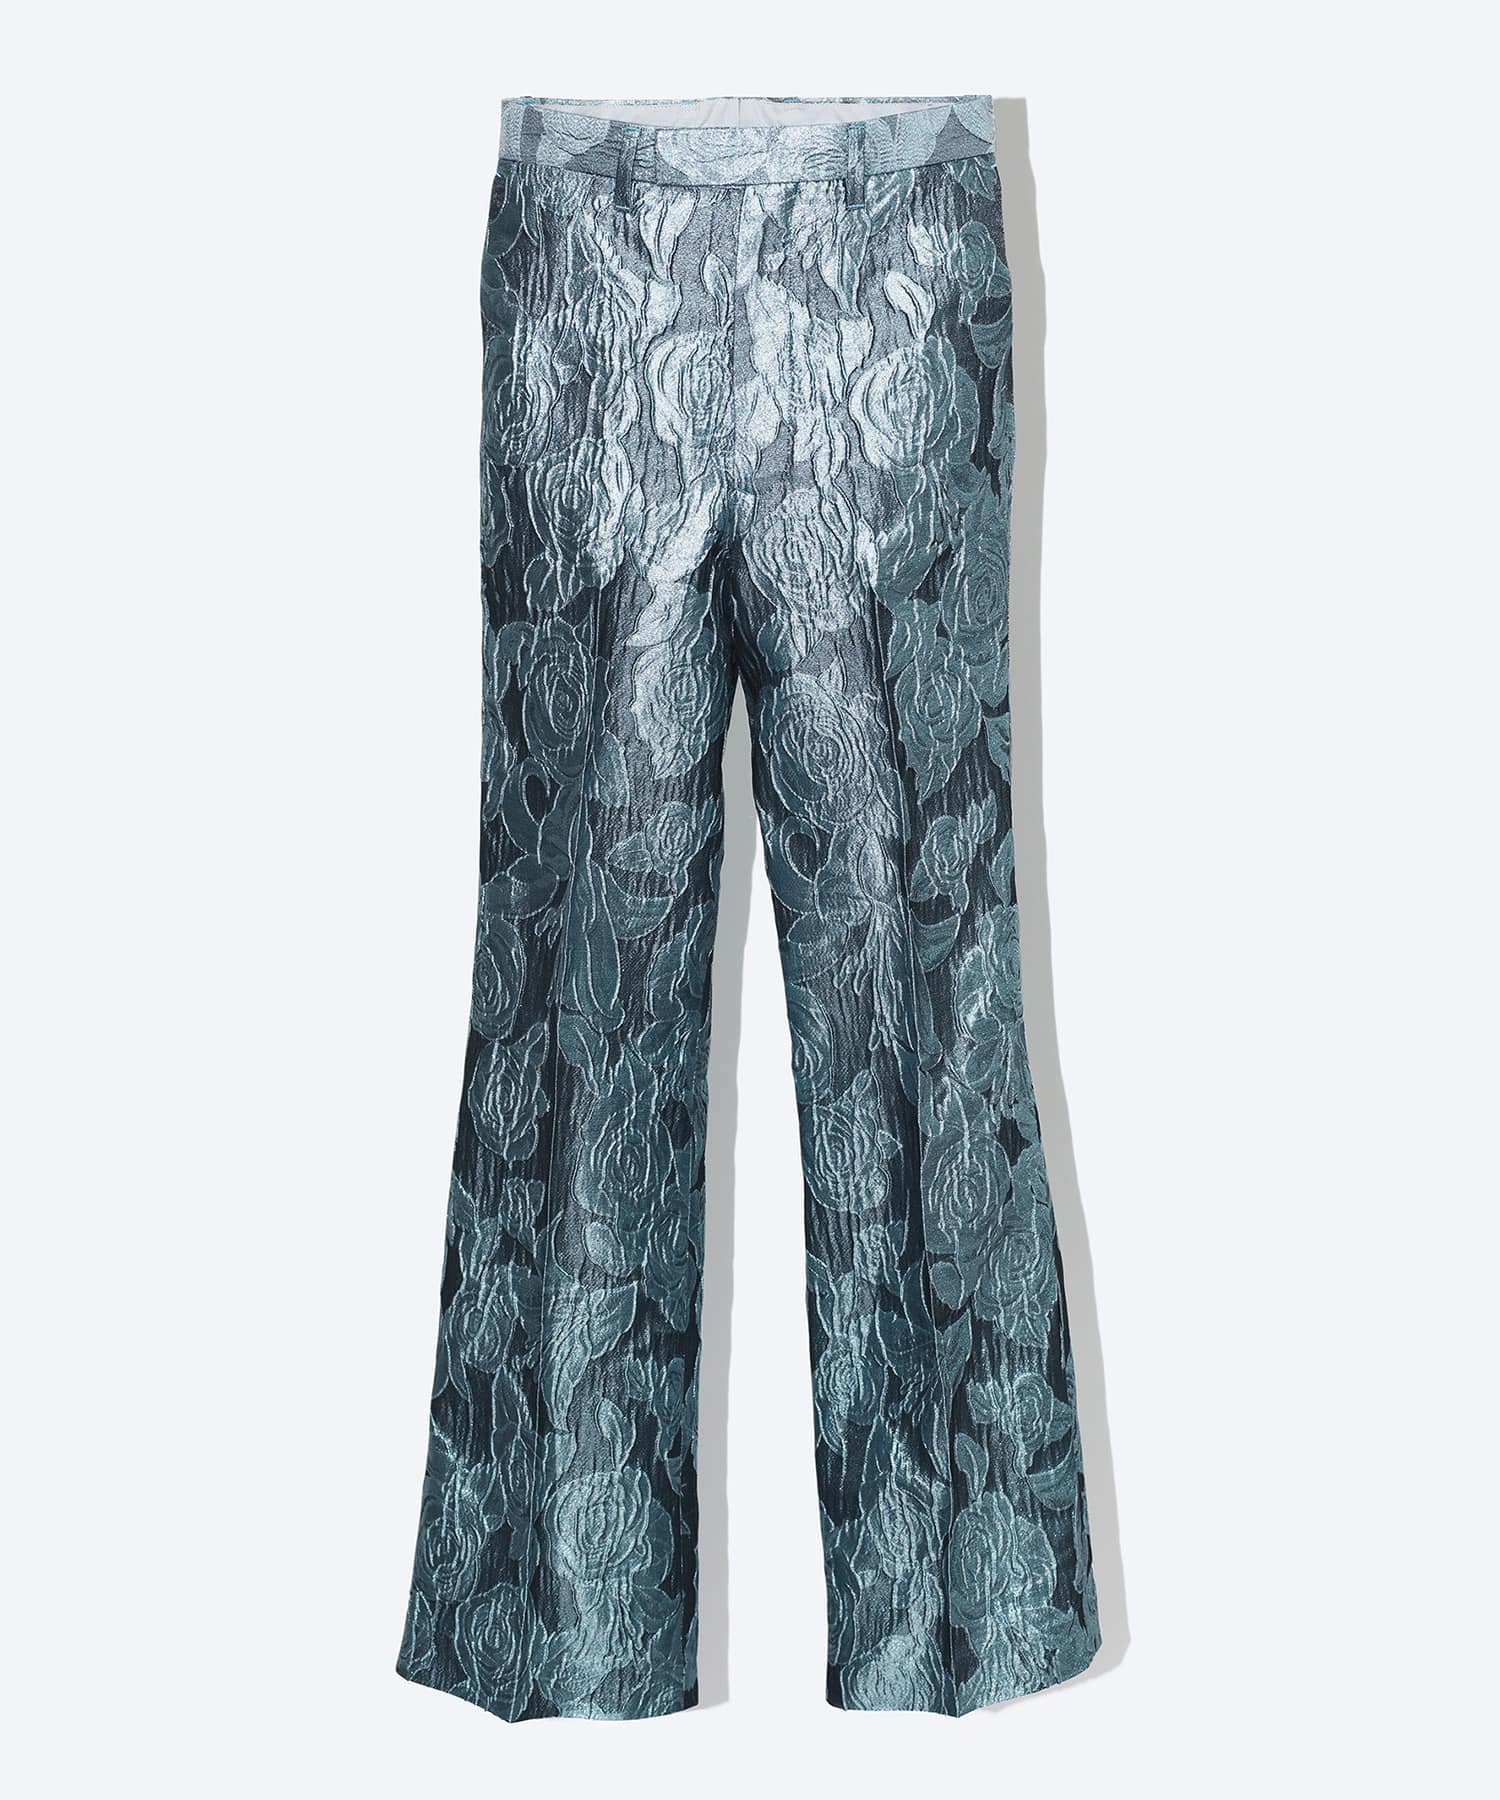 Polyester jacquard pants